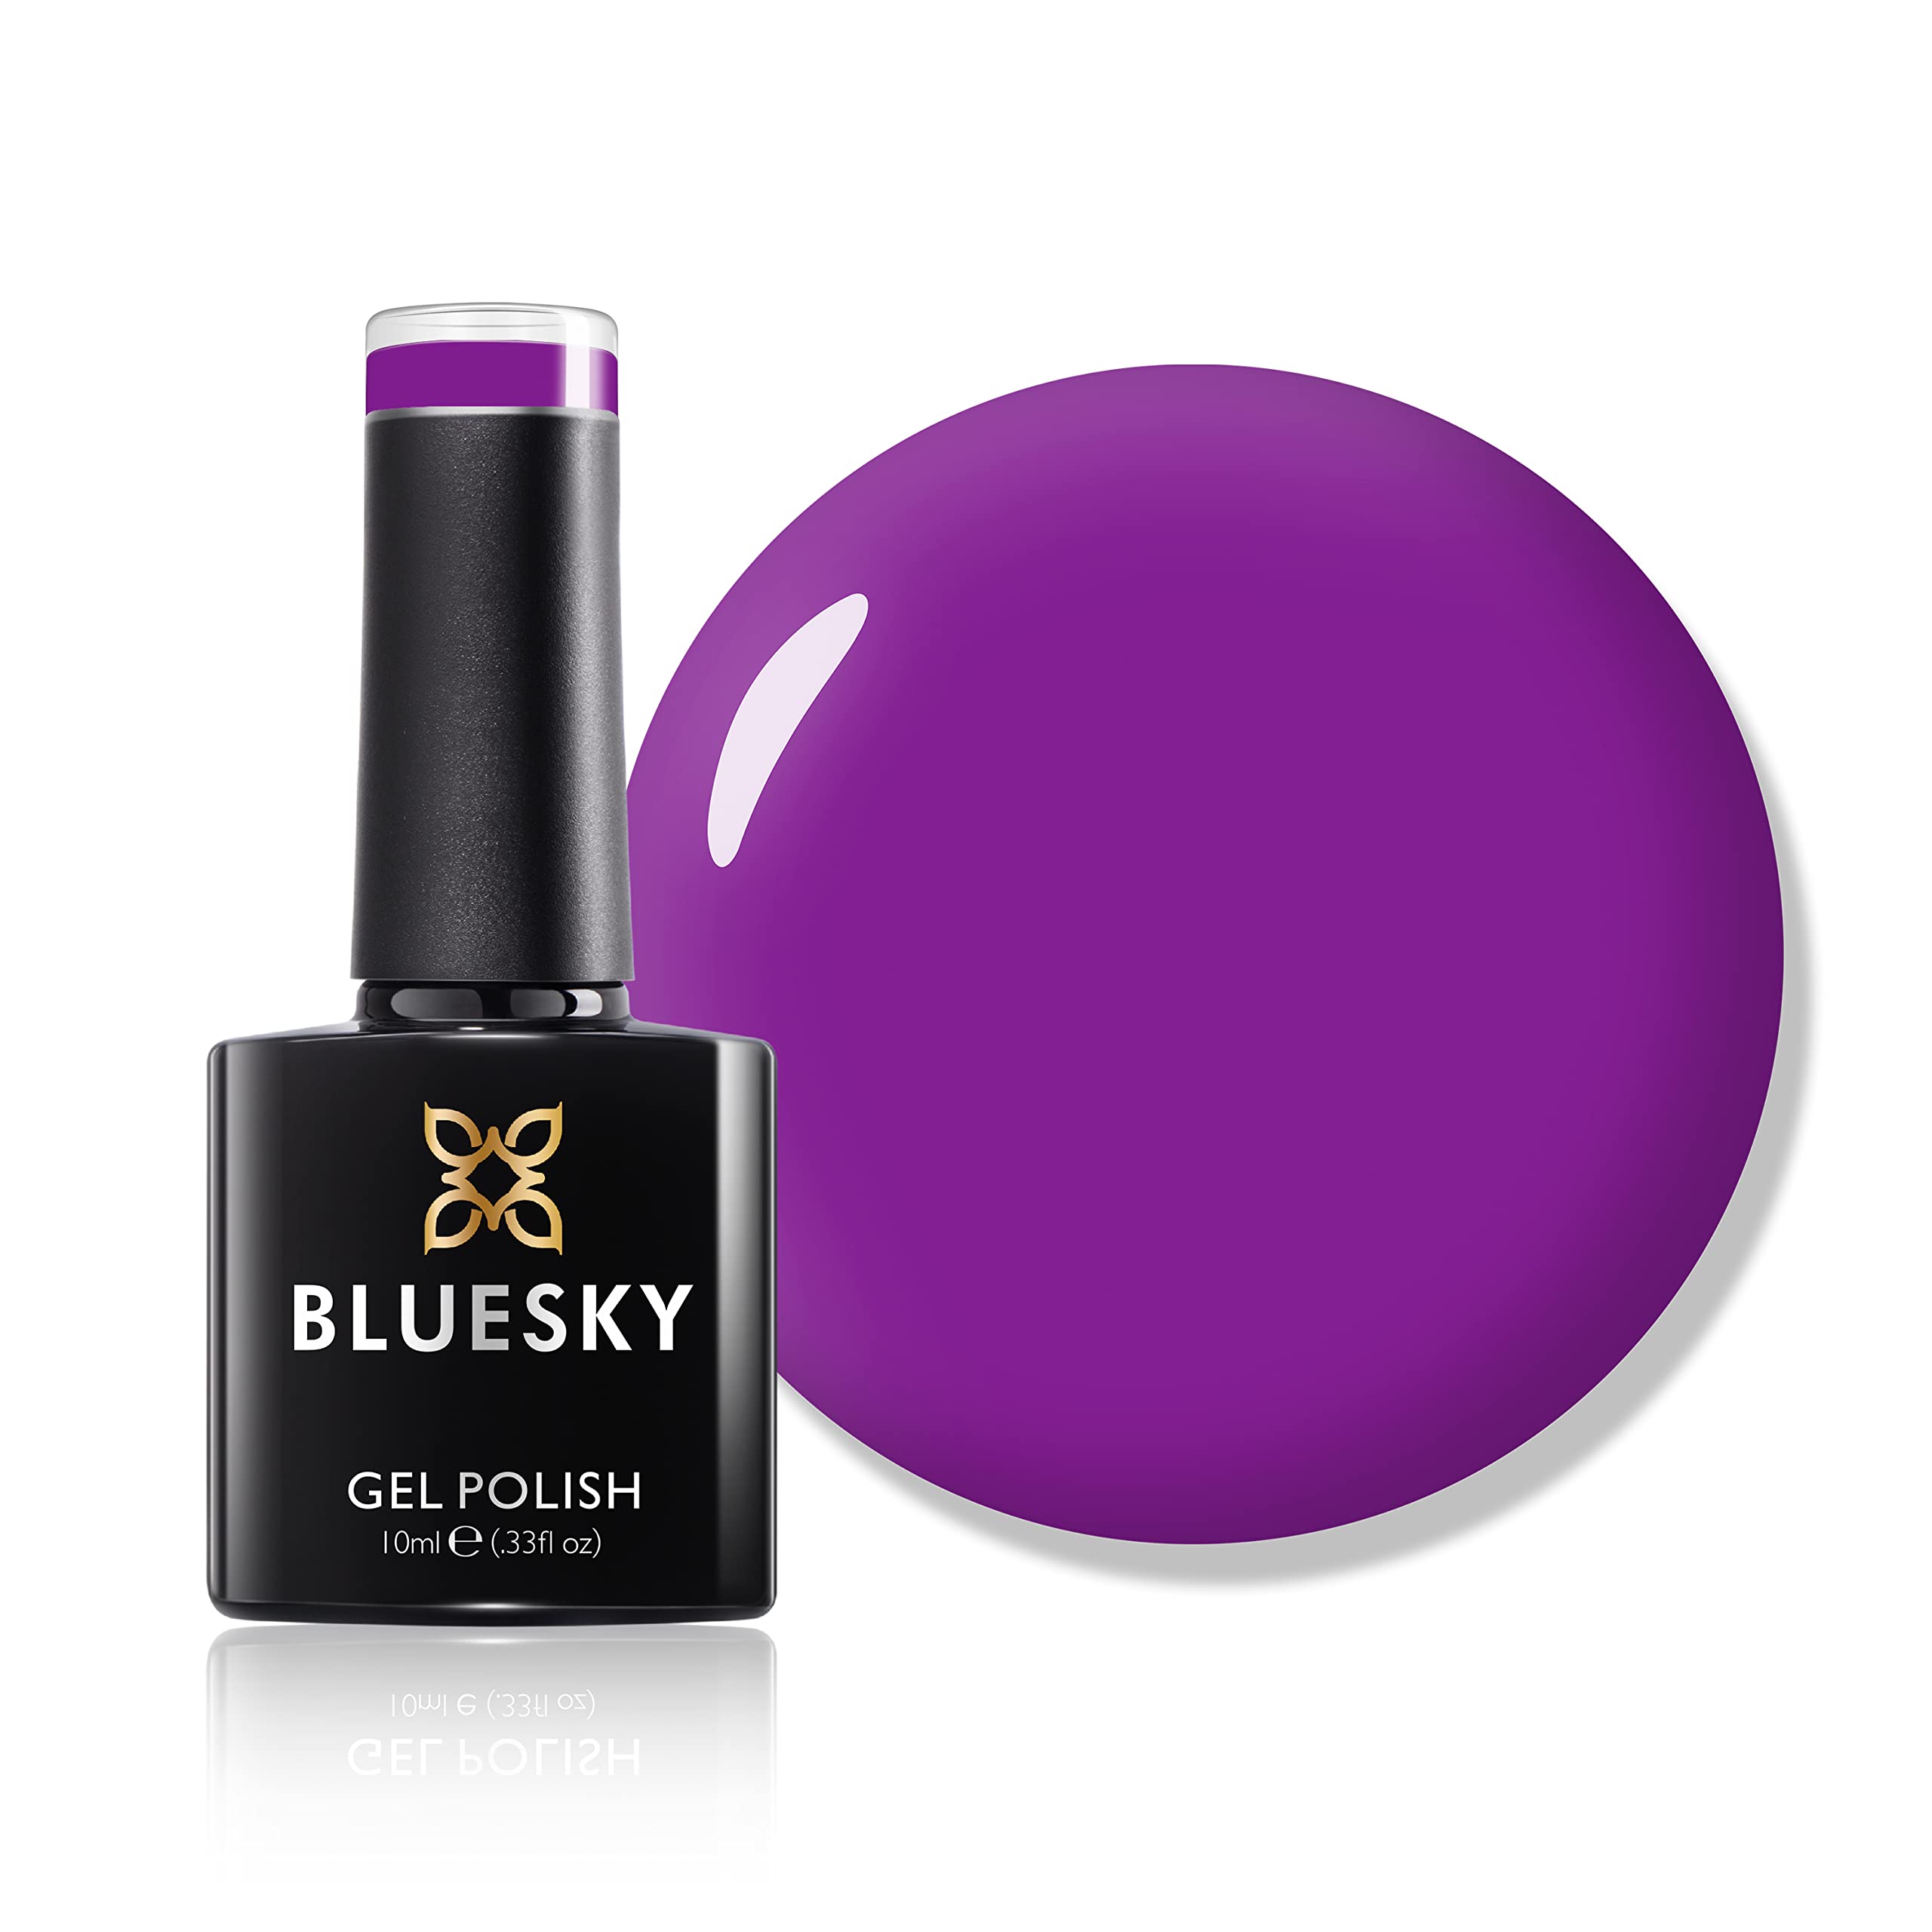 Bluesky gel polish 518, QCM01, 501, A51  http://radi-d.blogspot.bg/2015/12/galaxy-nails.html | Bluesky gel polish, Gel  polish, Bluesky gel